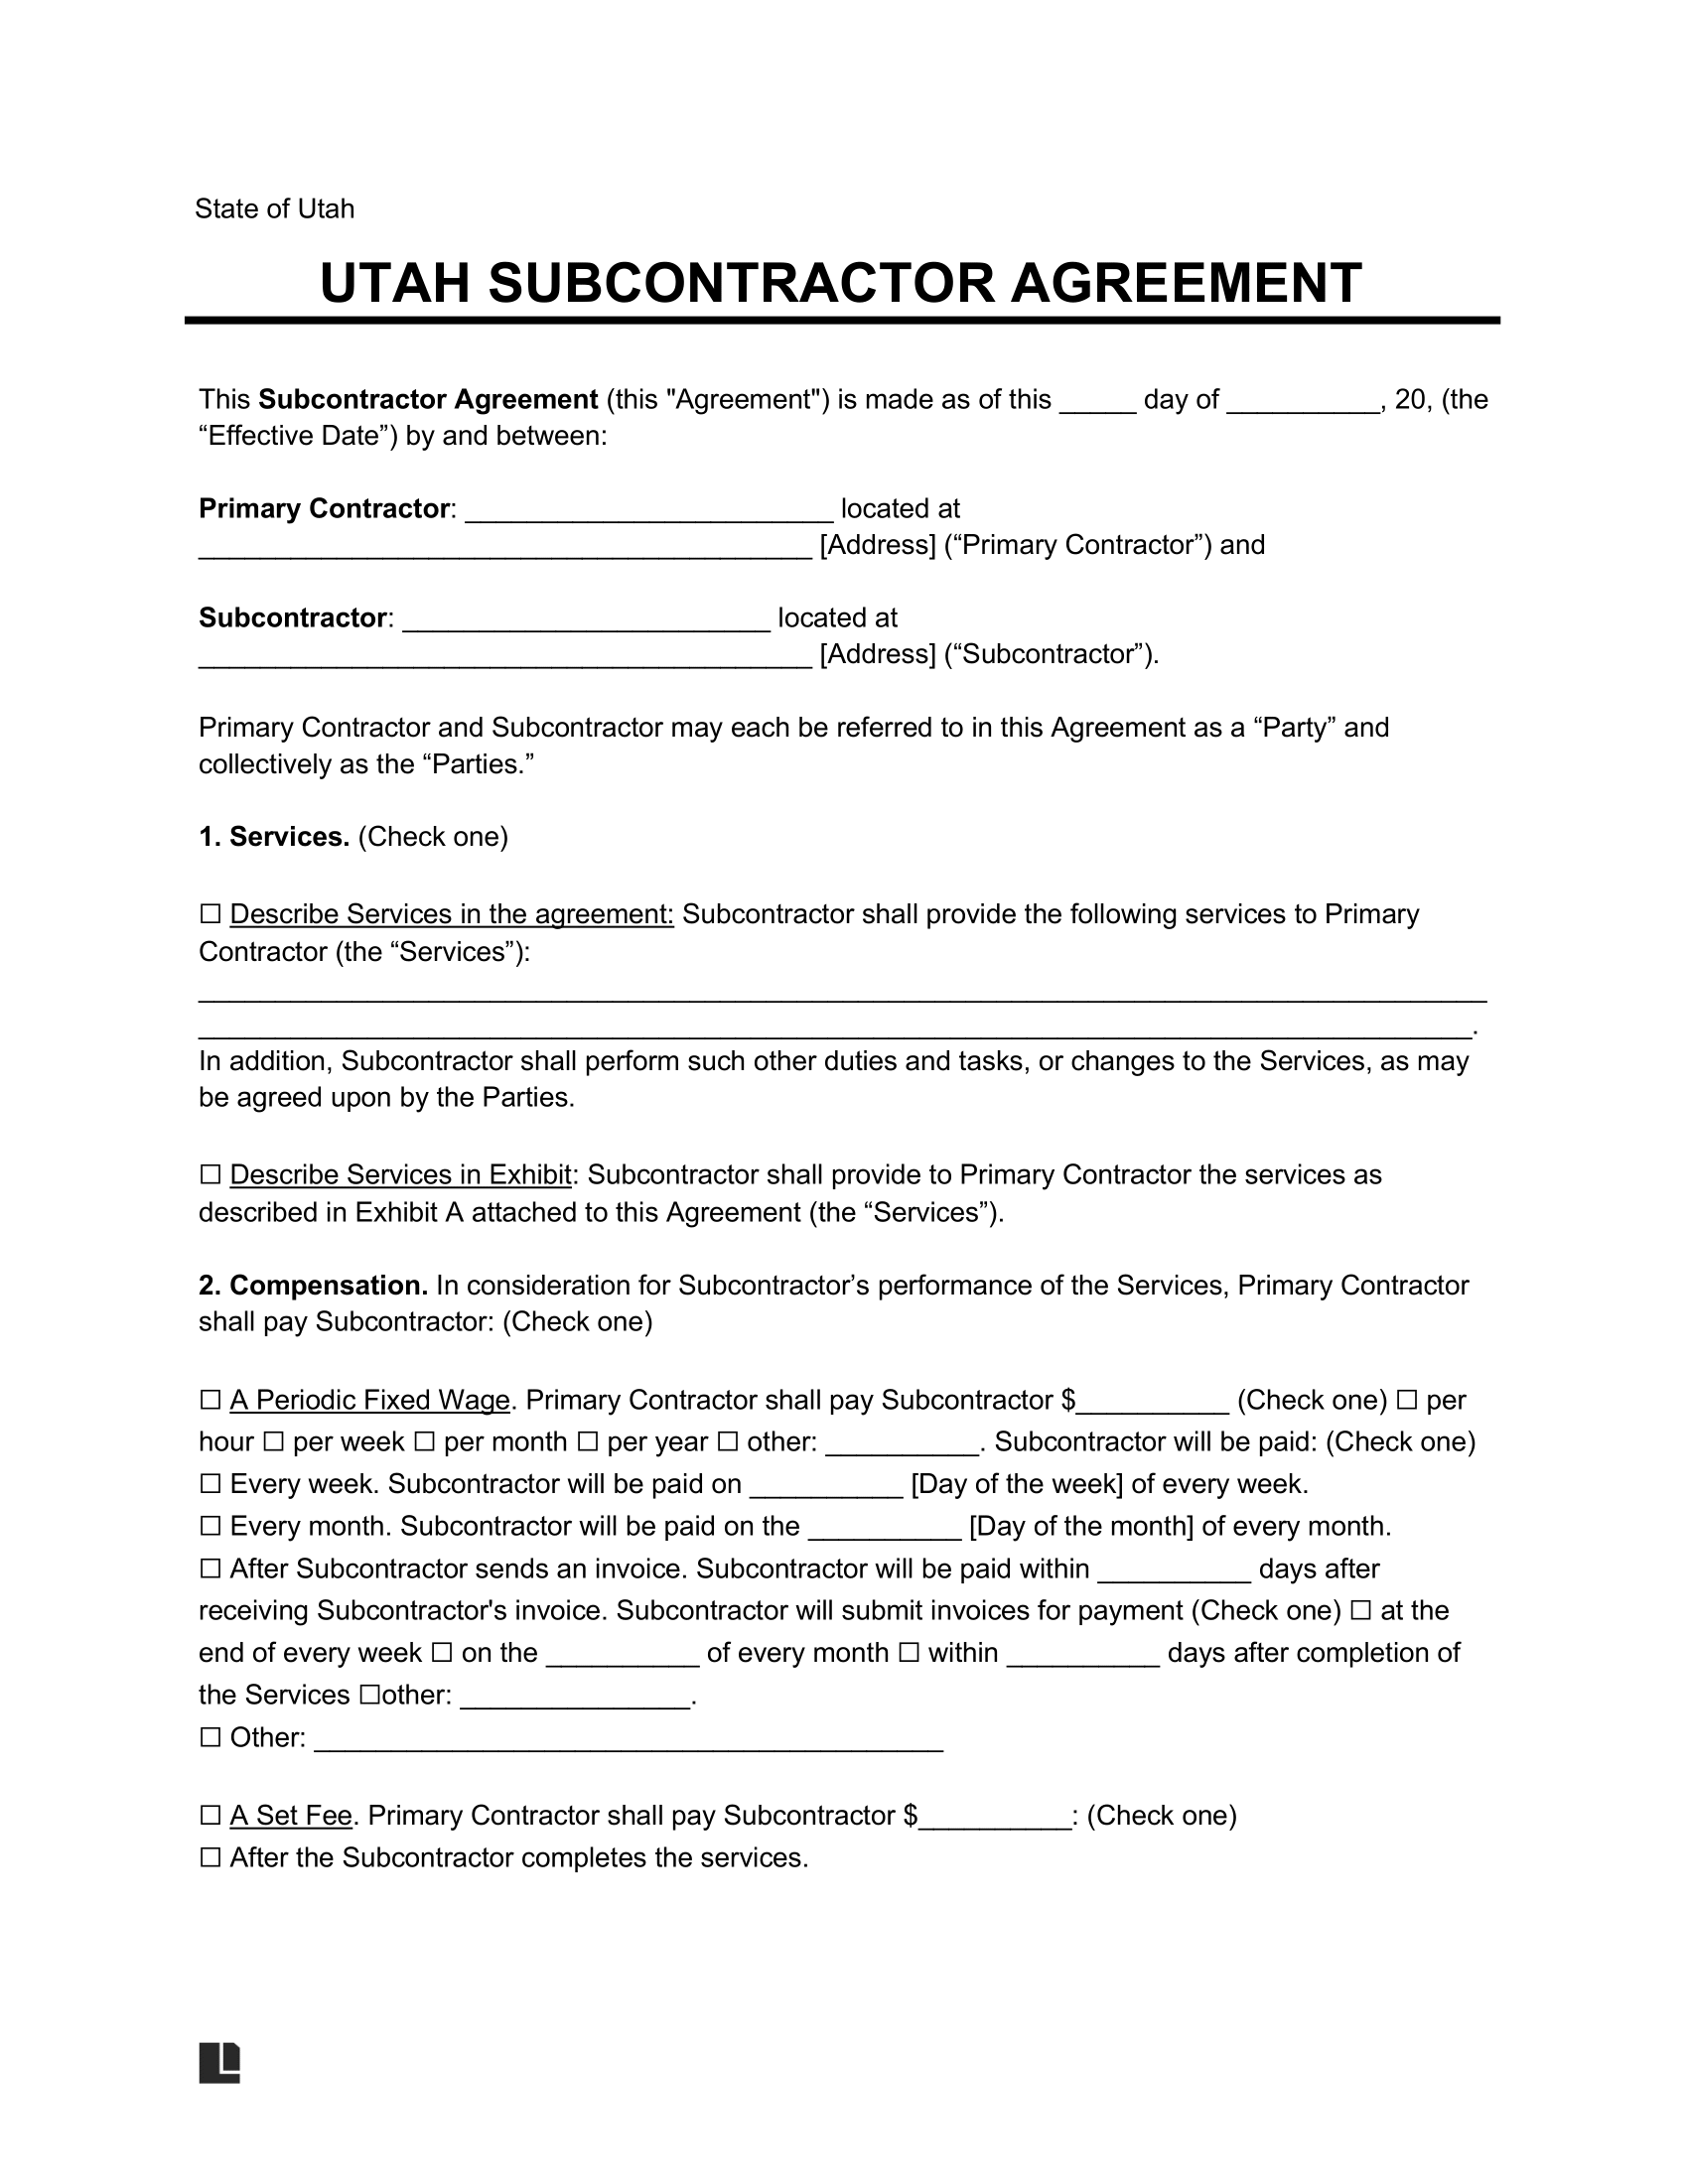 Utah Subcontractor Agreement Template